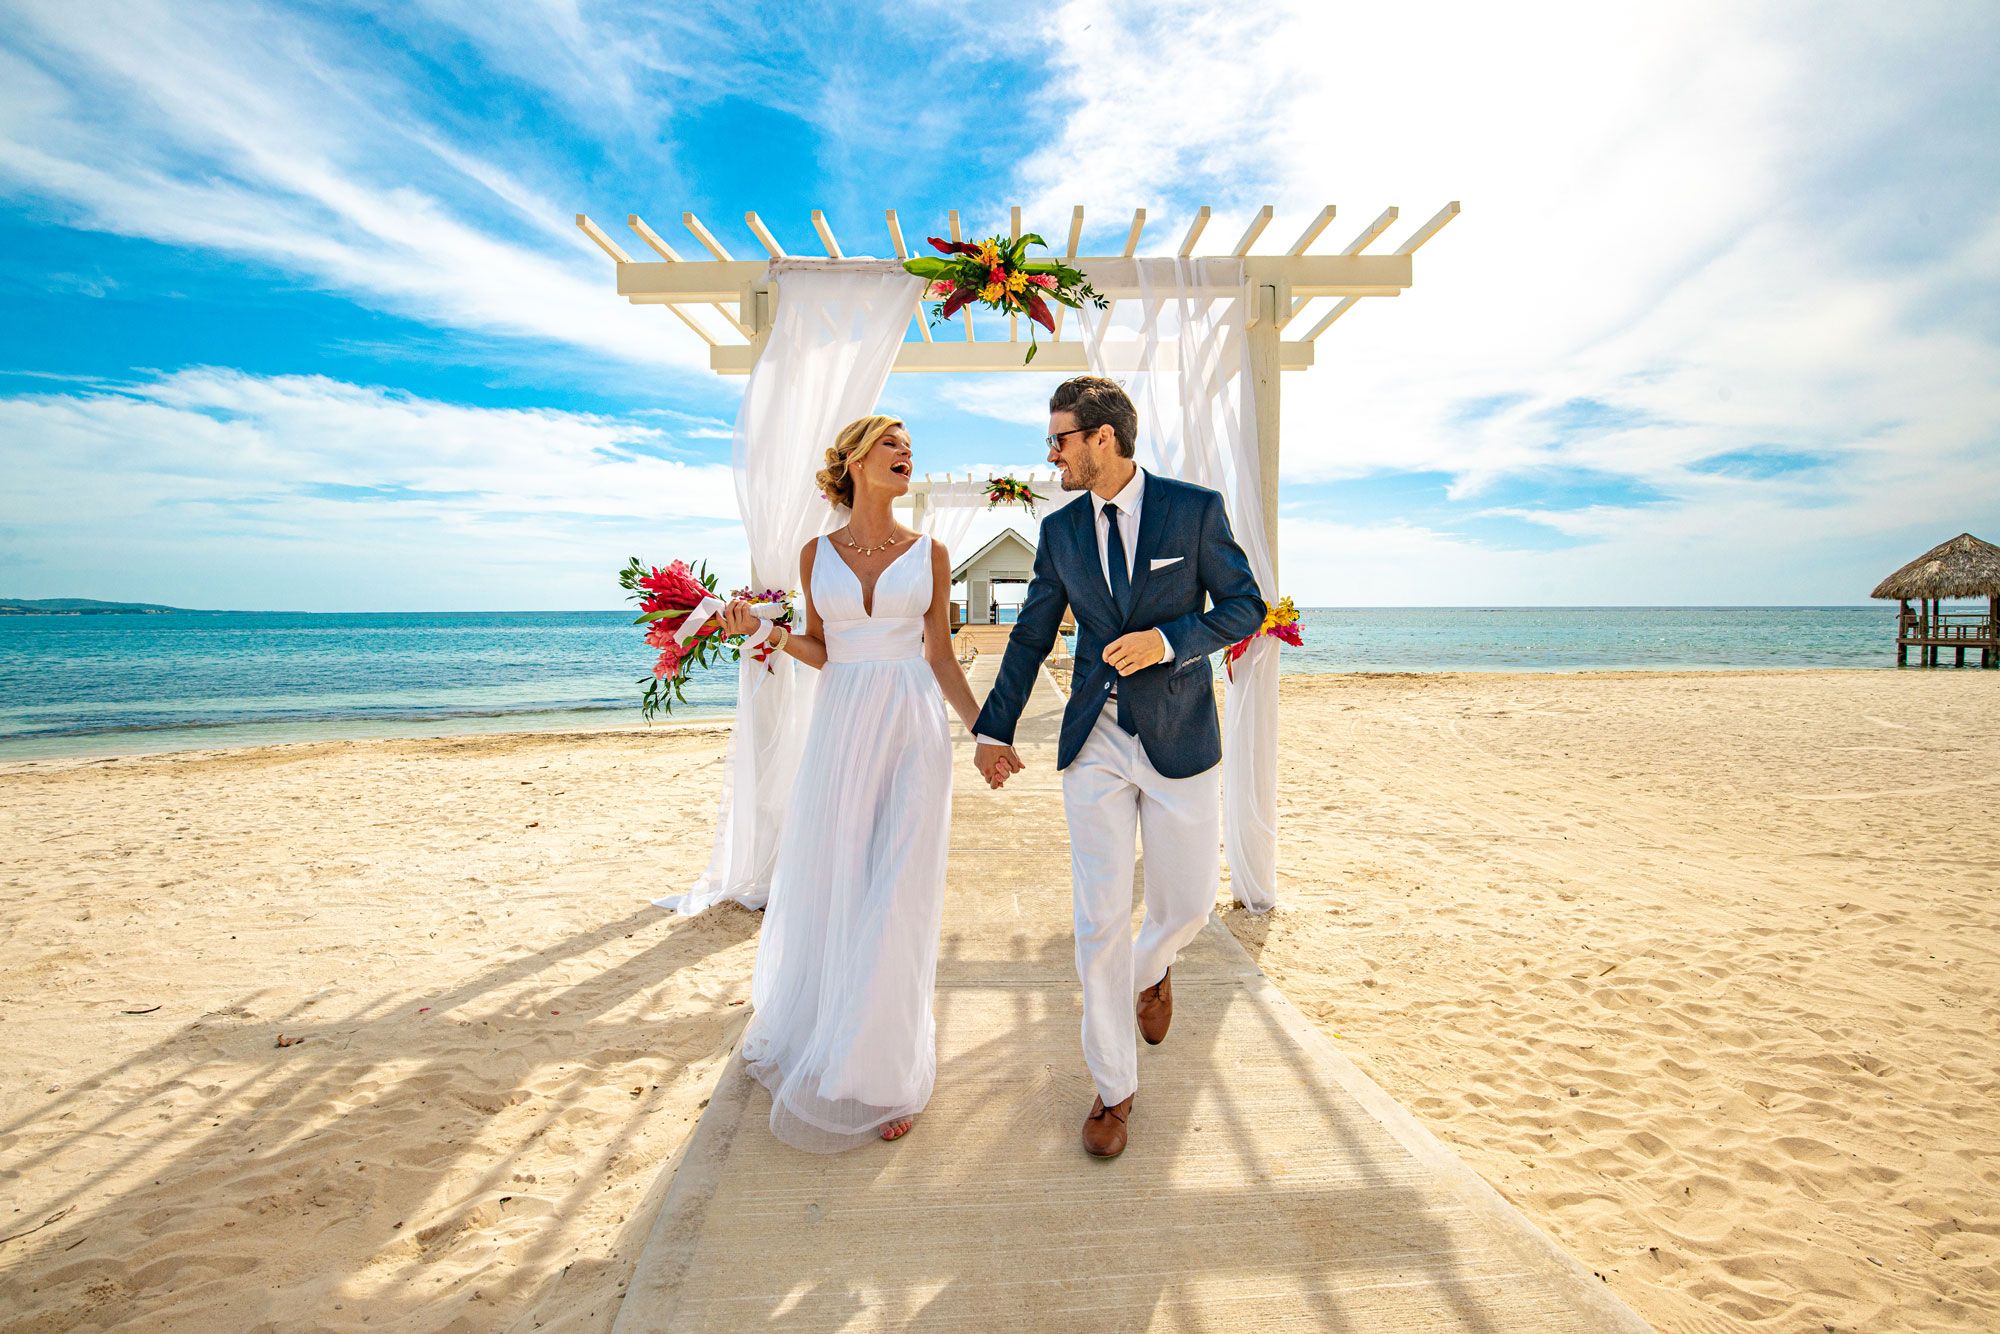 https://www.beaches.com/blog/content/images/2019/11/Sandals-South-Coast-Wedding-Chapel2.jpg